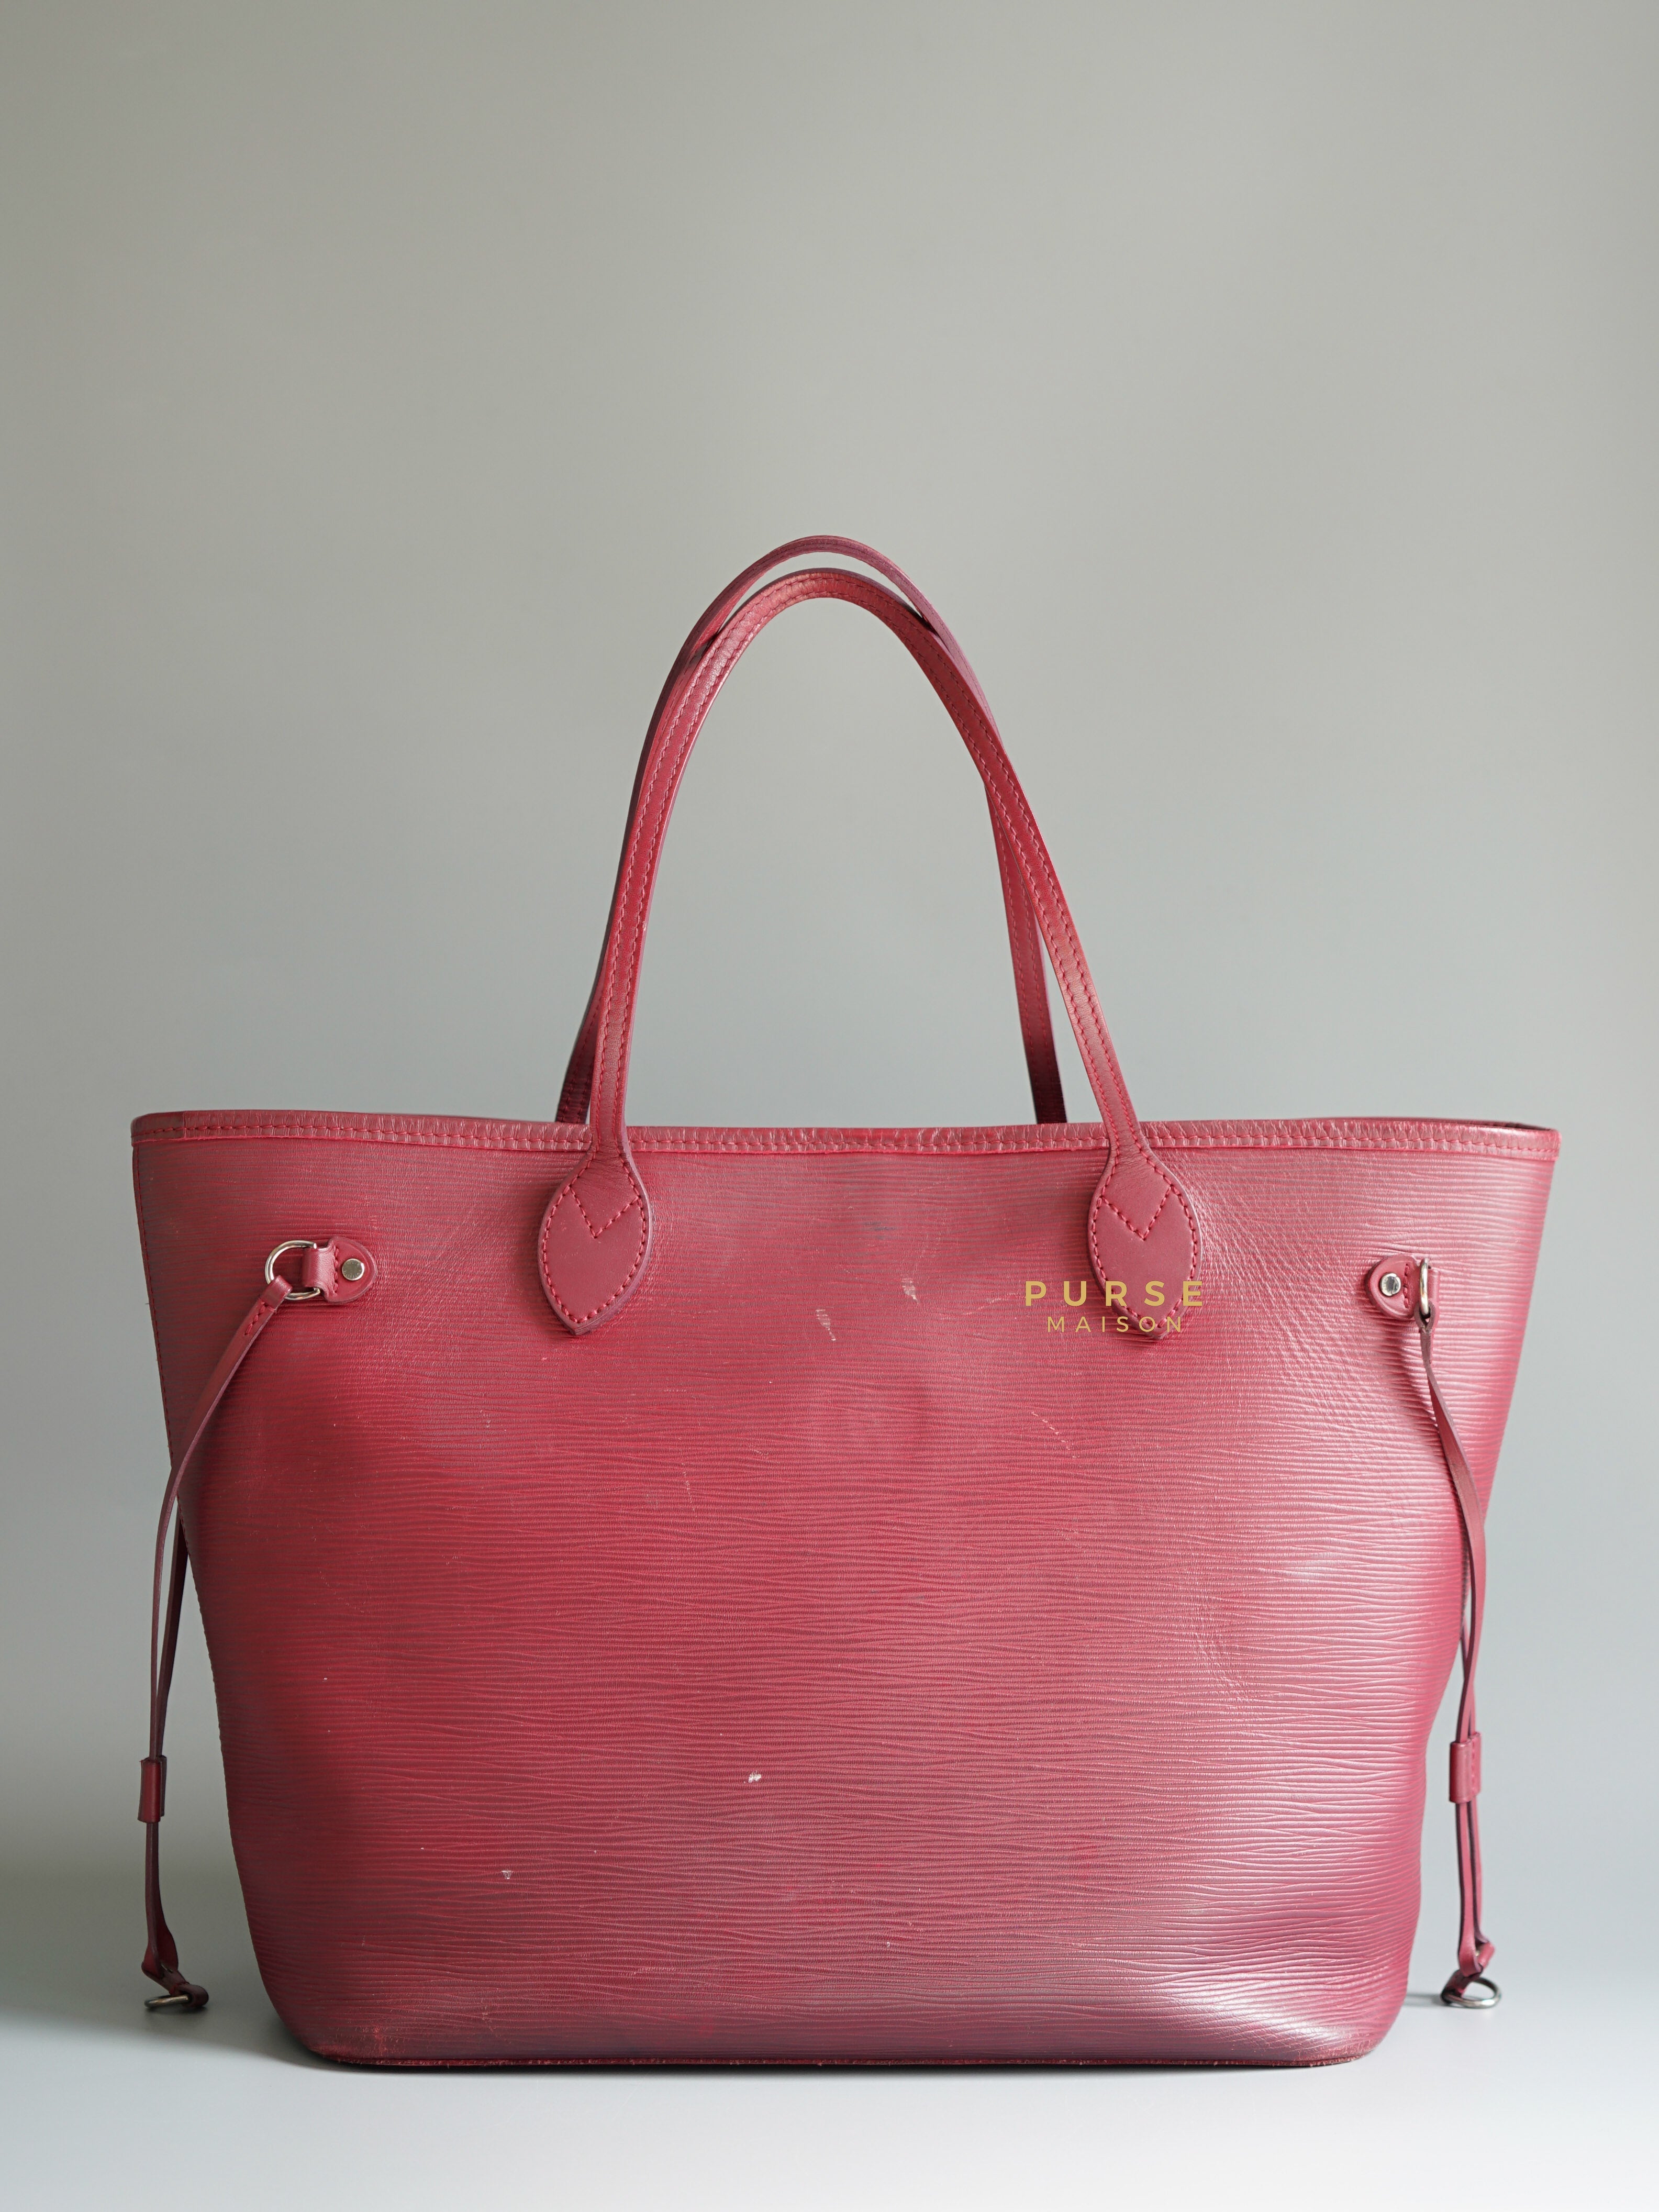 Louis Vuitton Epi Leather Neverfull Bag in Fuchsia (Date Code: FL2133) | Purse Maison Luxury Bags Shop